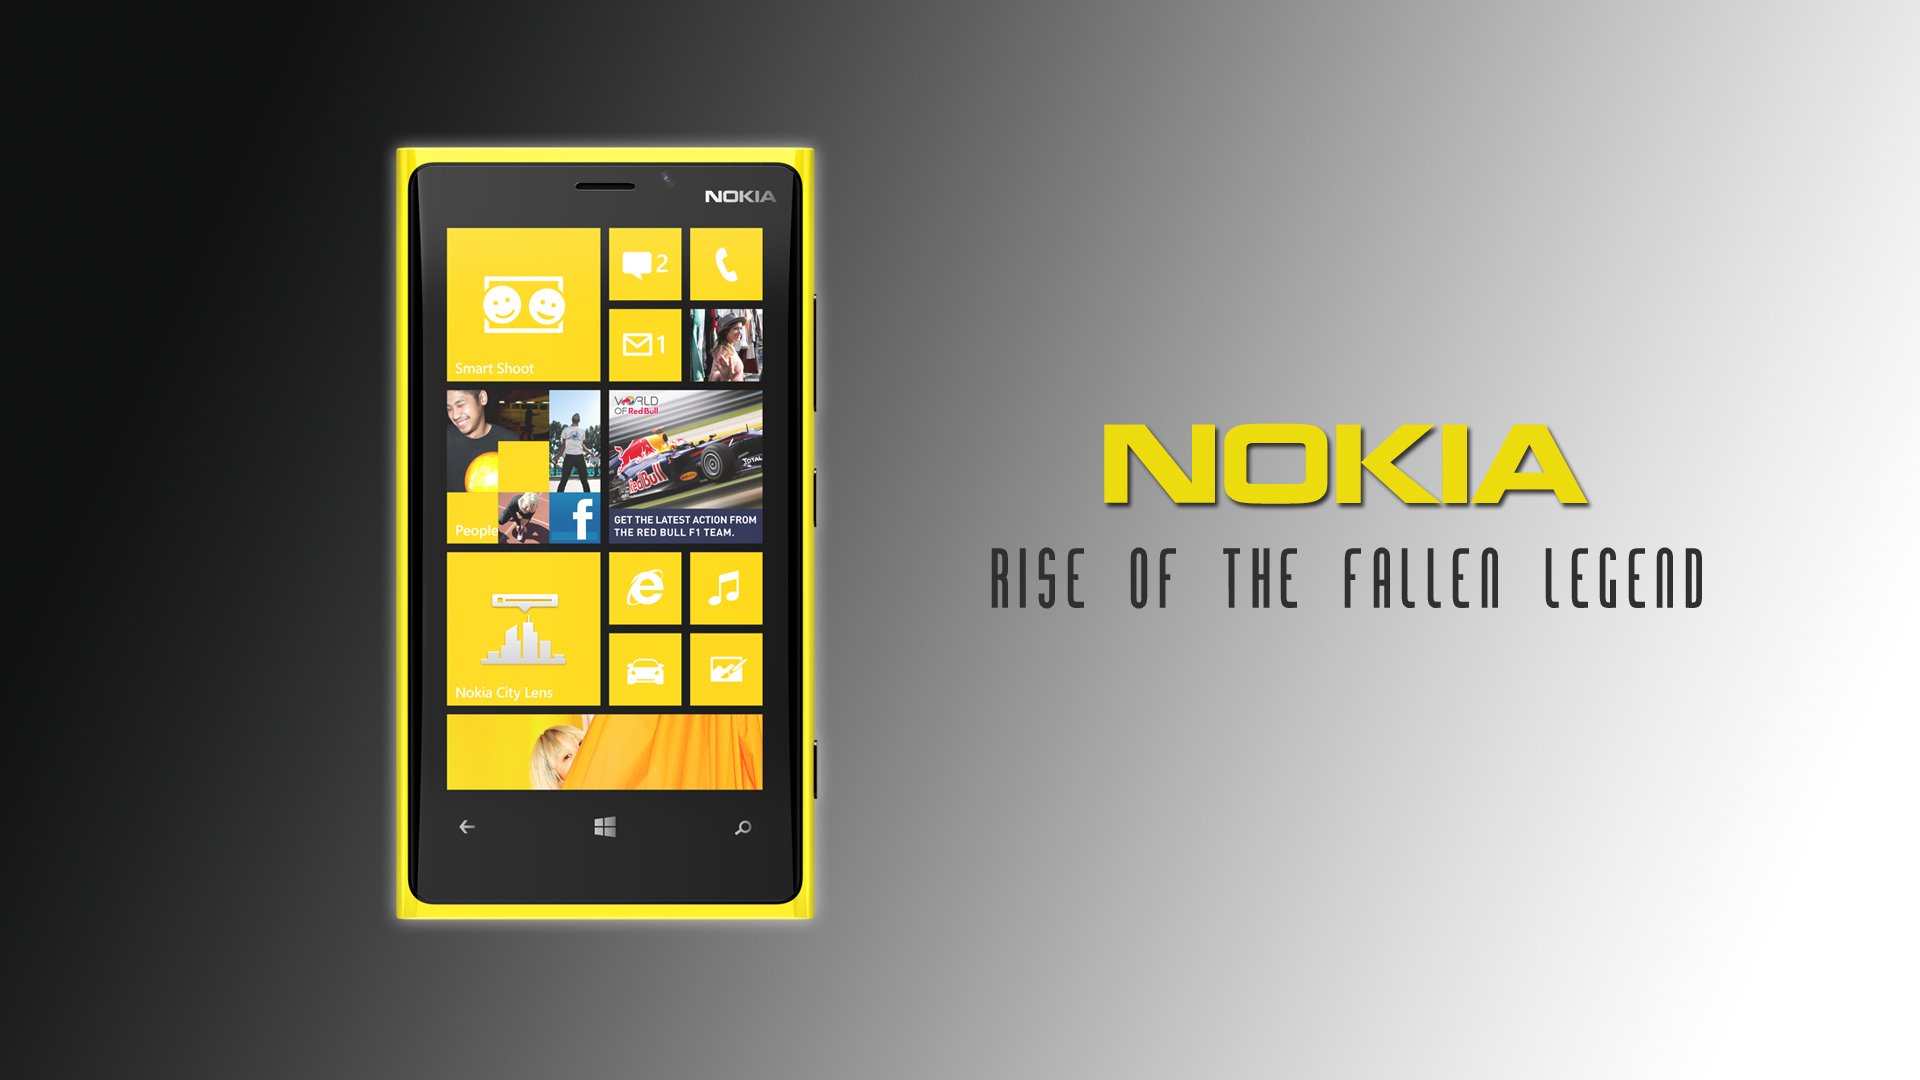 Картинка телефона нокиа. Nokia Lumia 920. Обои Nokia. Обои Nokia Lumia. Картинки нокиа.